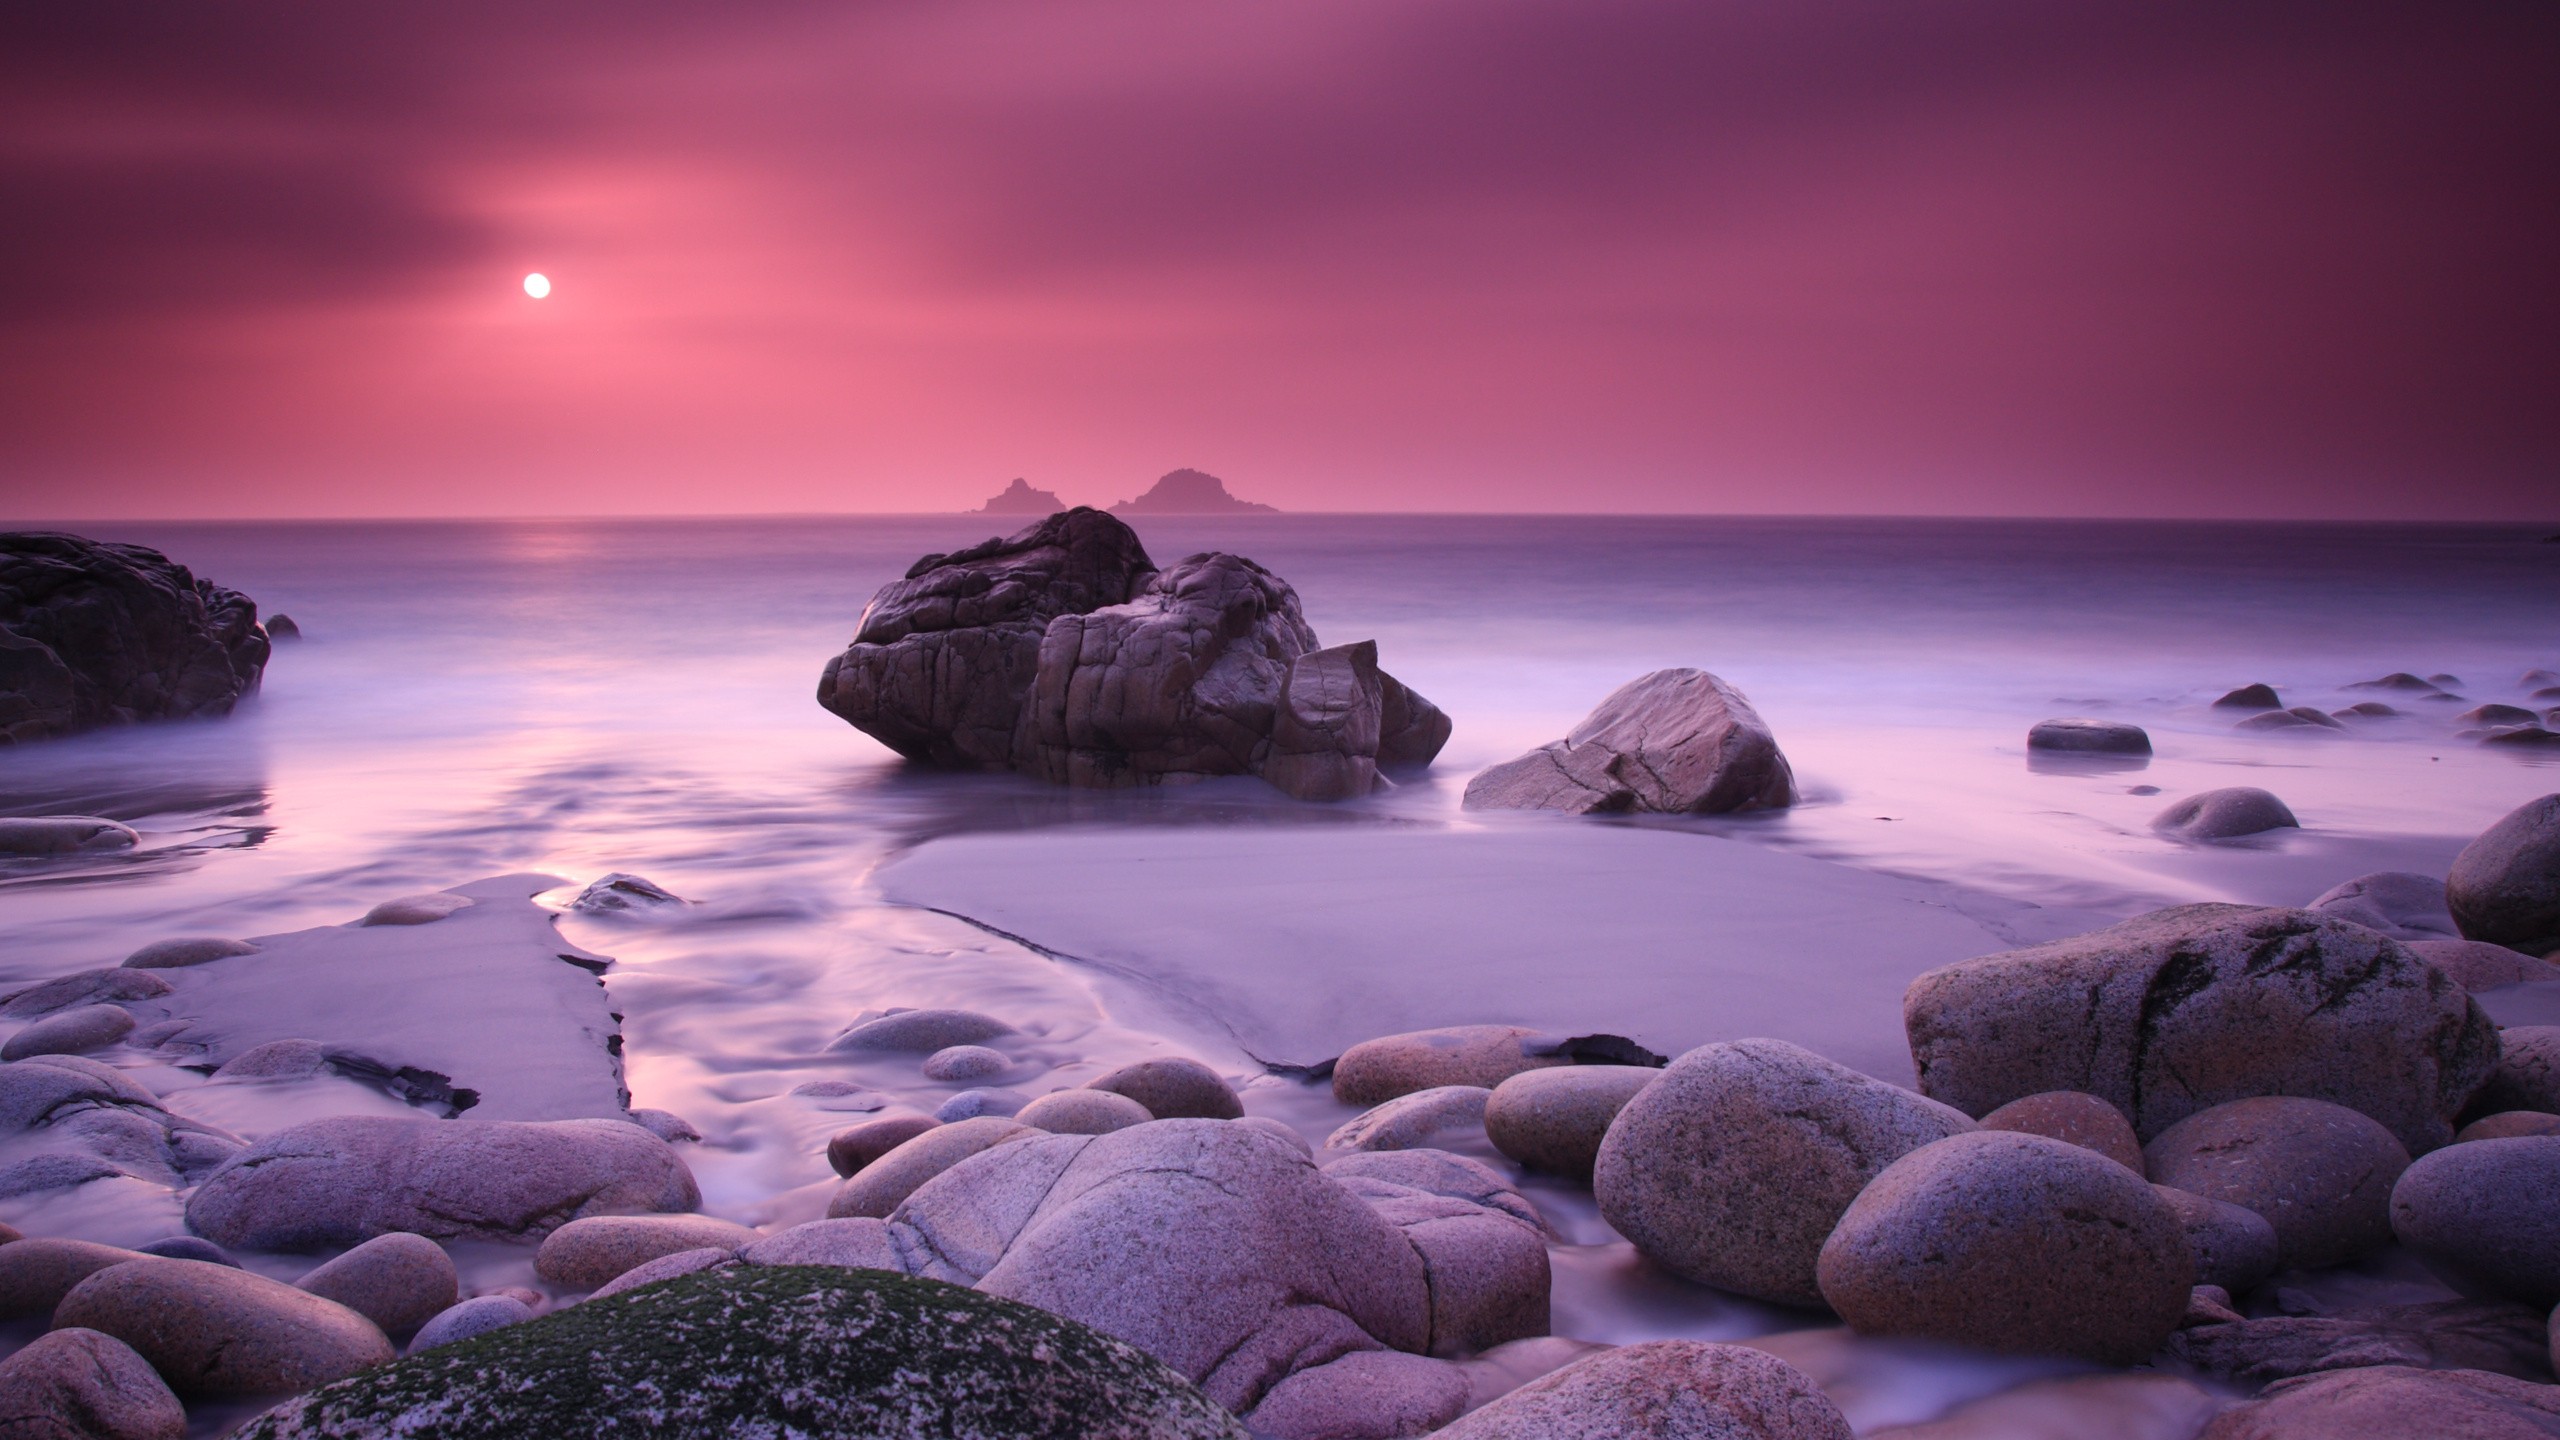 General 2560x1440 rocks beach sea nature purple